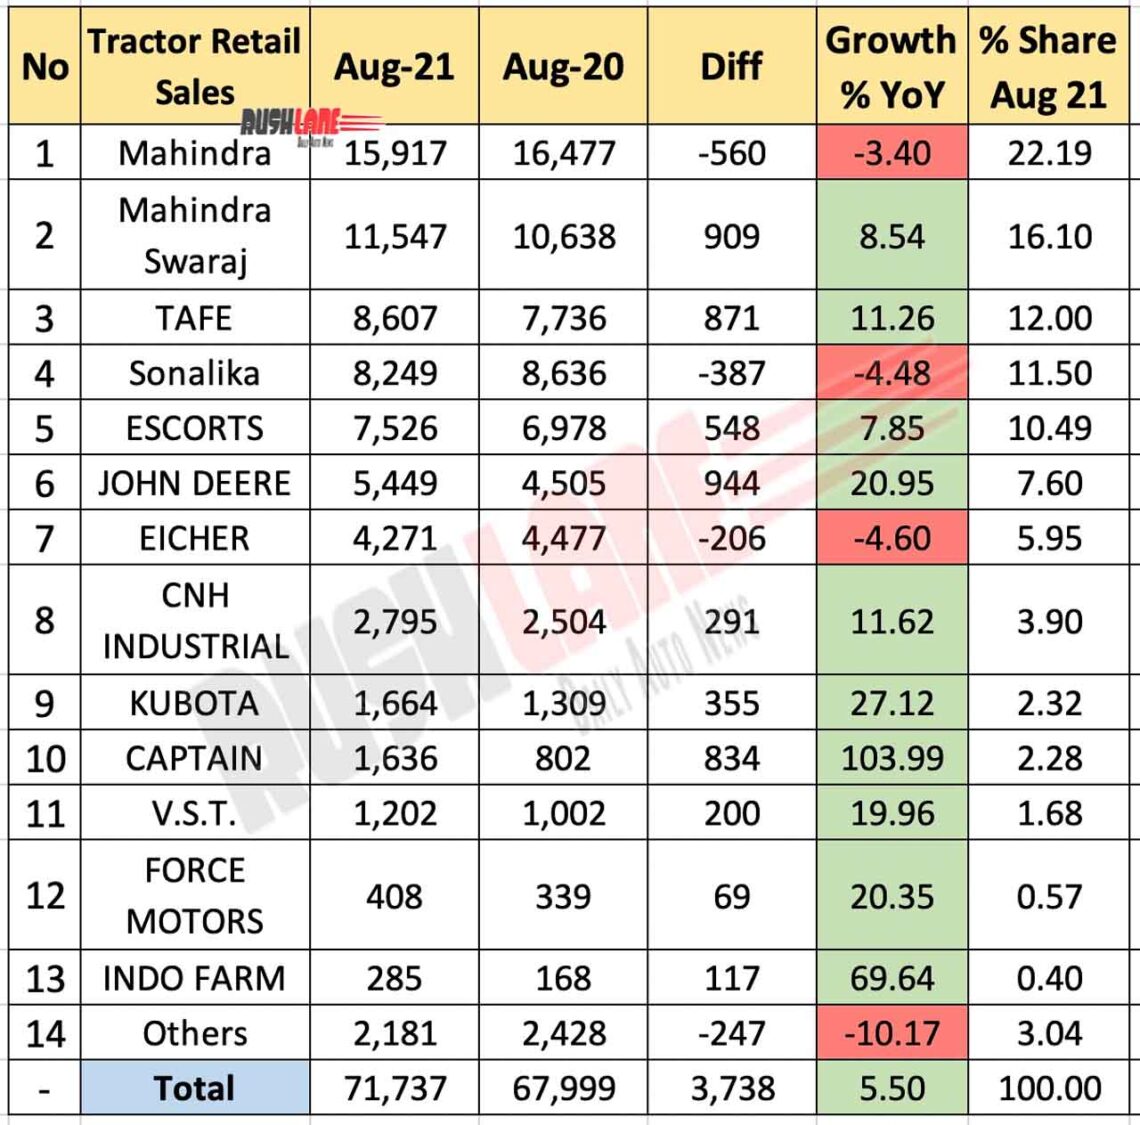 Tractor Retail Sales Aug 2021 vs Aug 2020 (YoY) - FADA